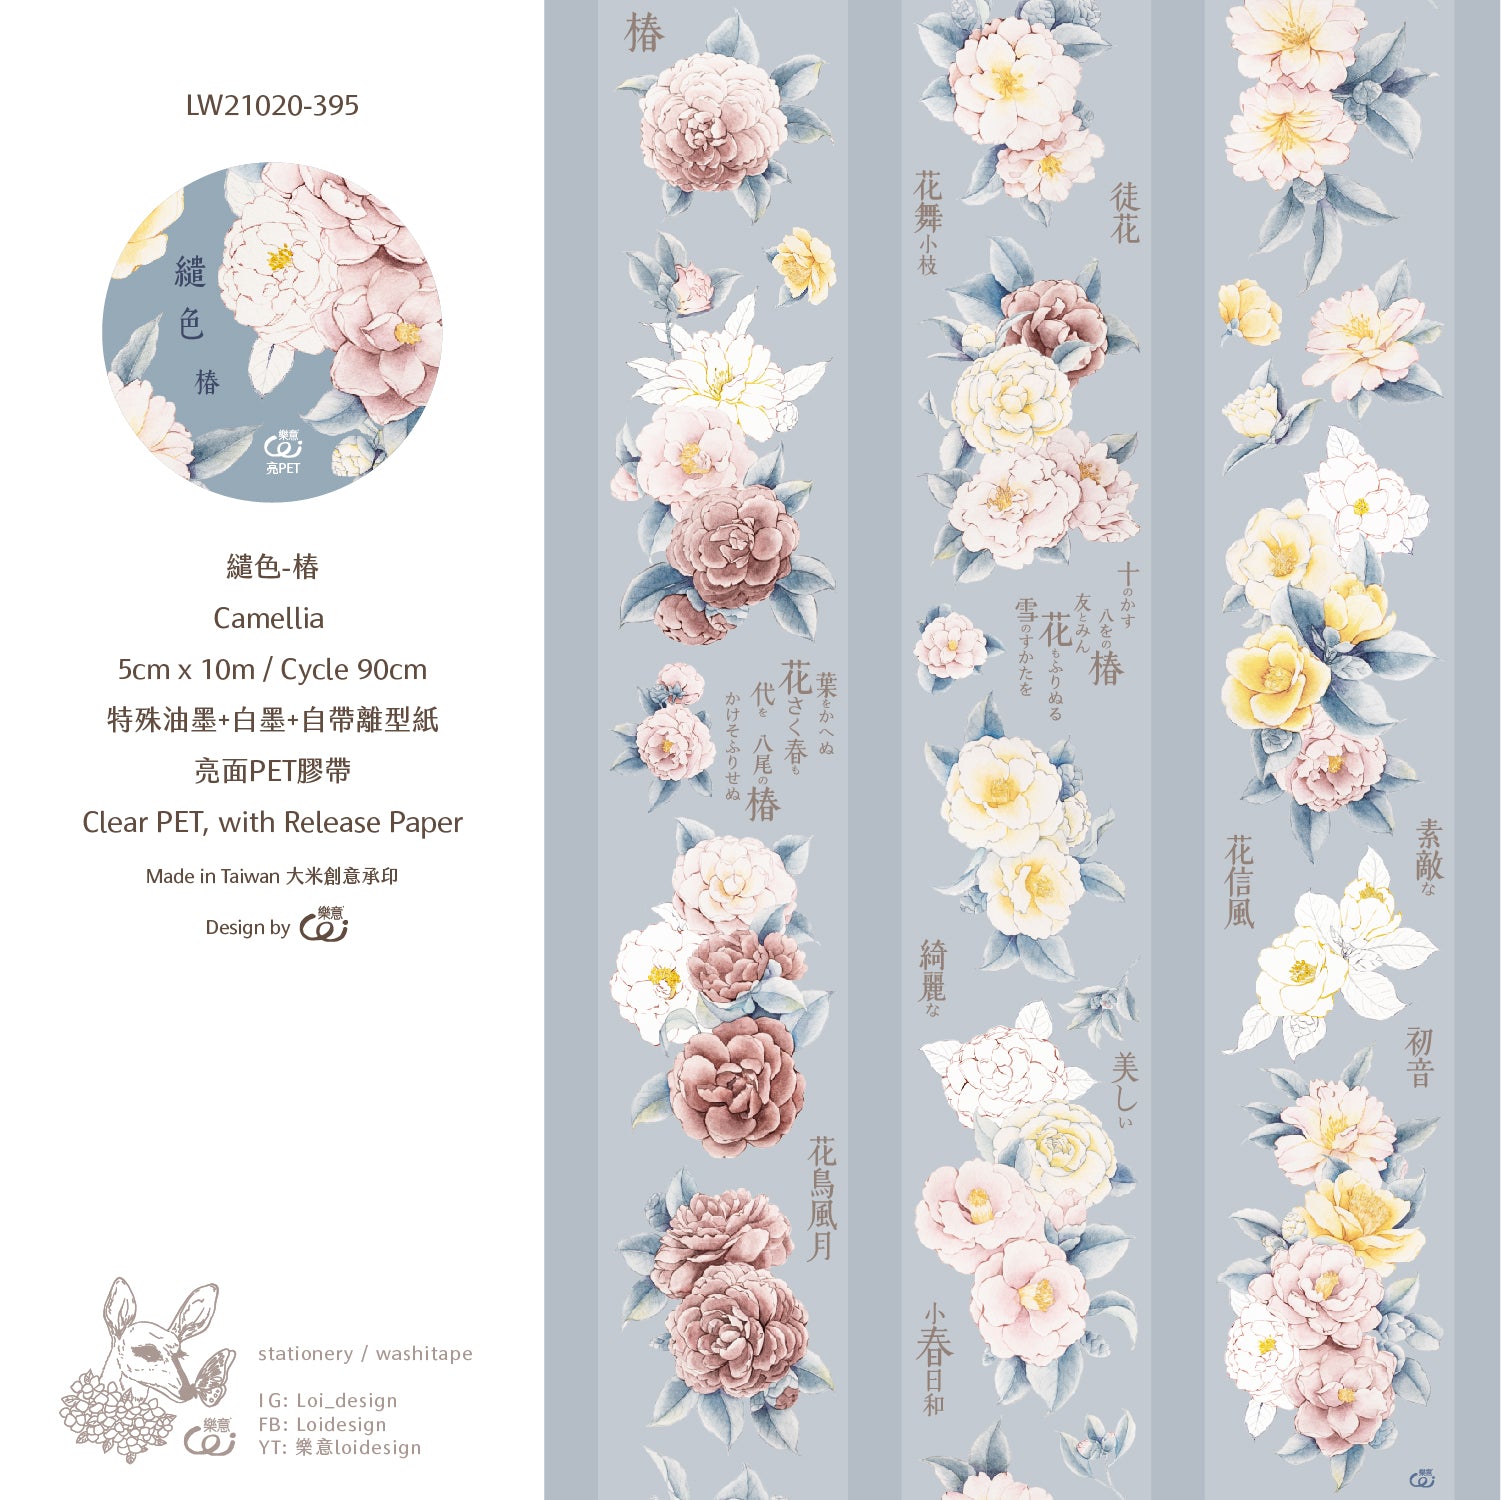 Teal Floral - Washi Tape